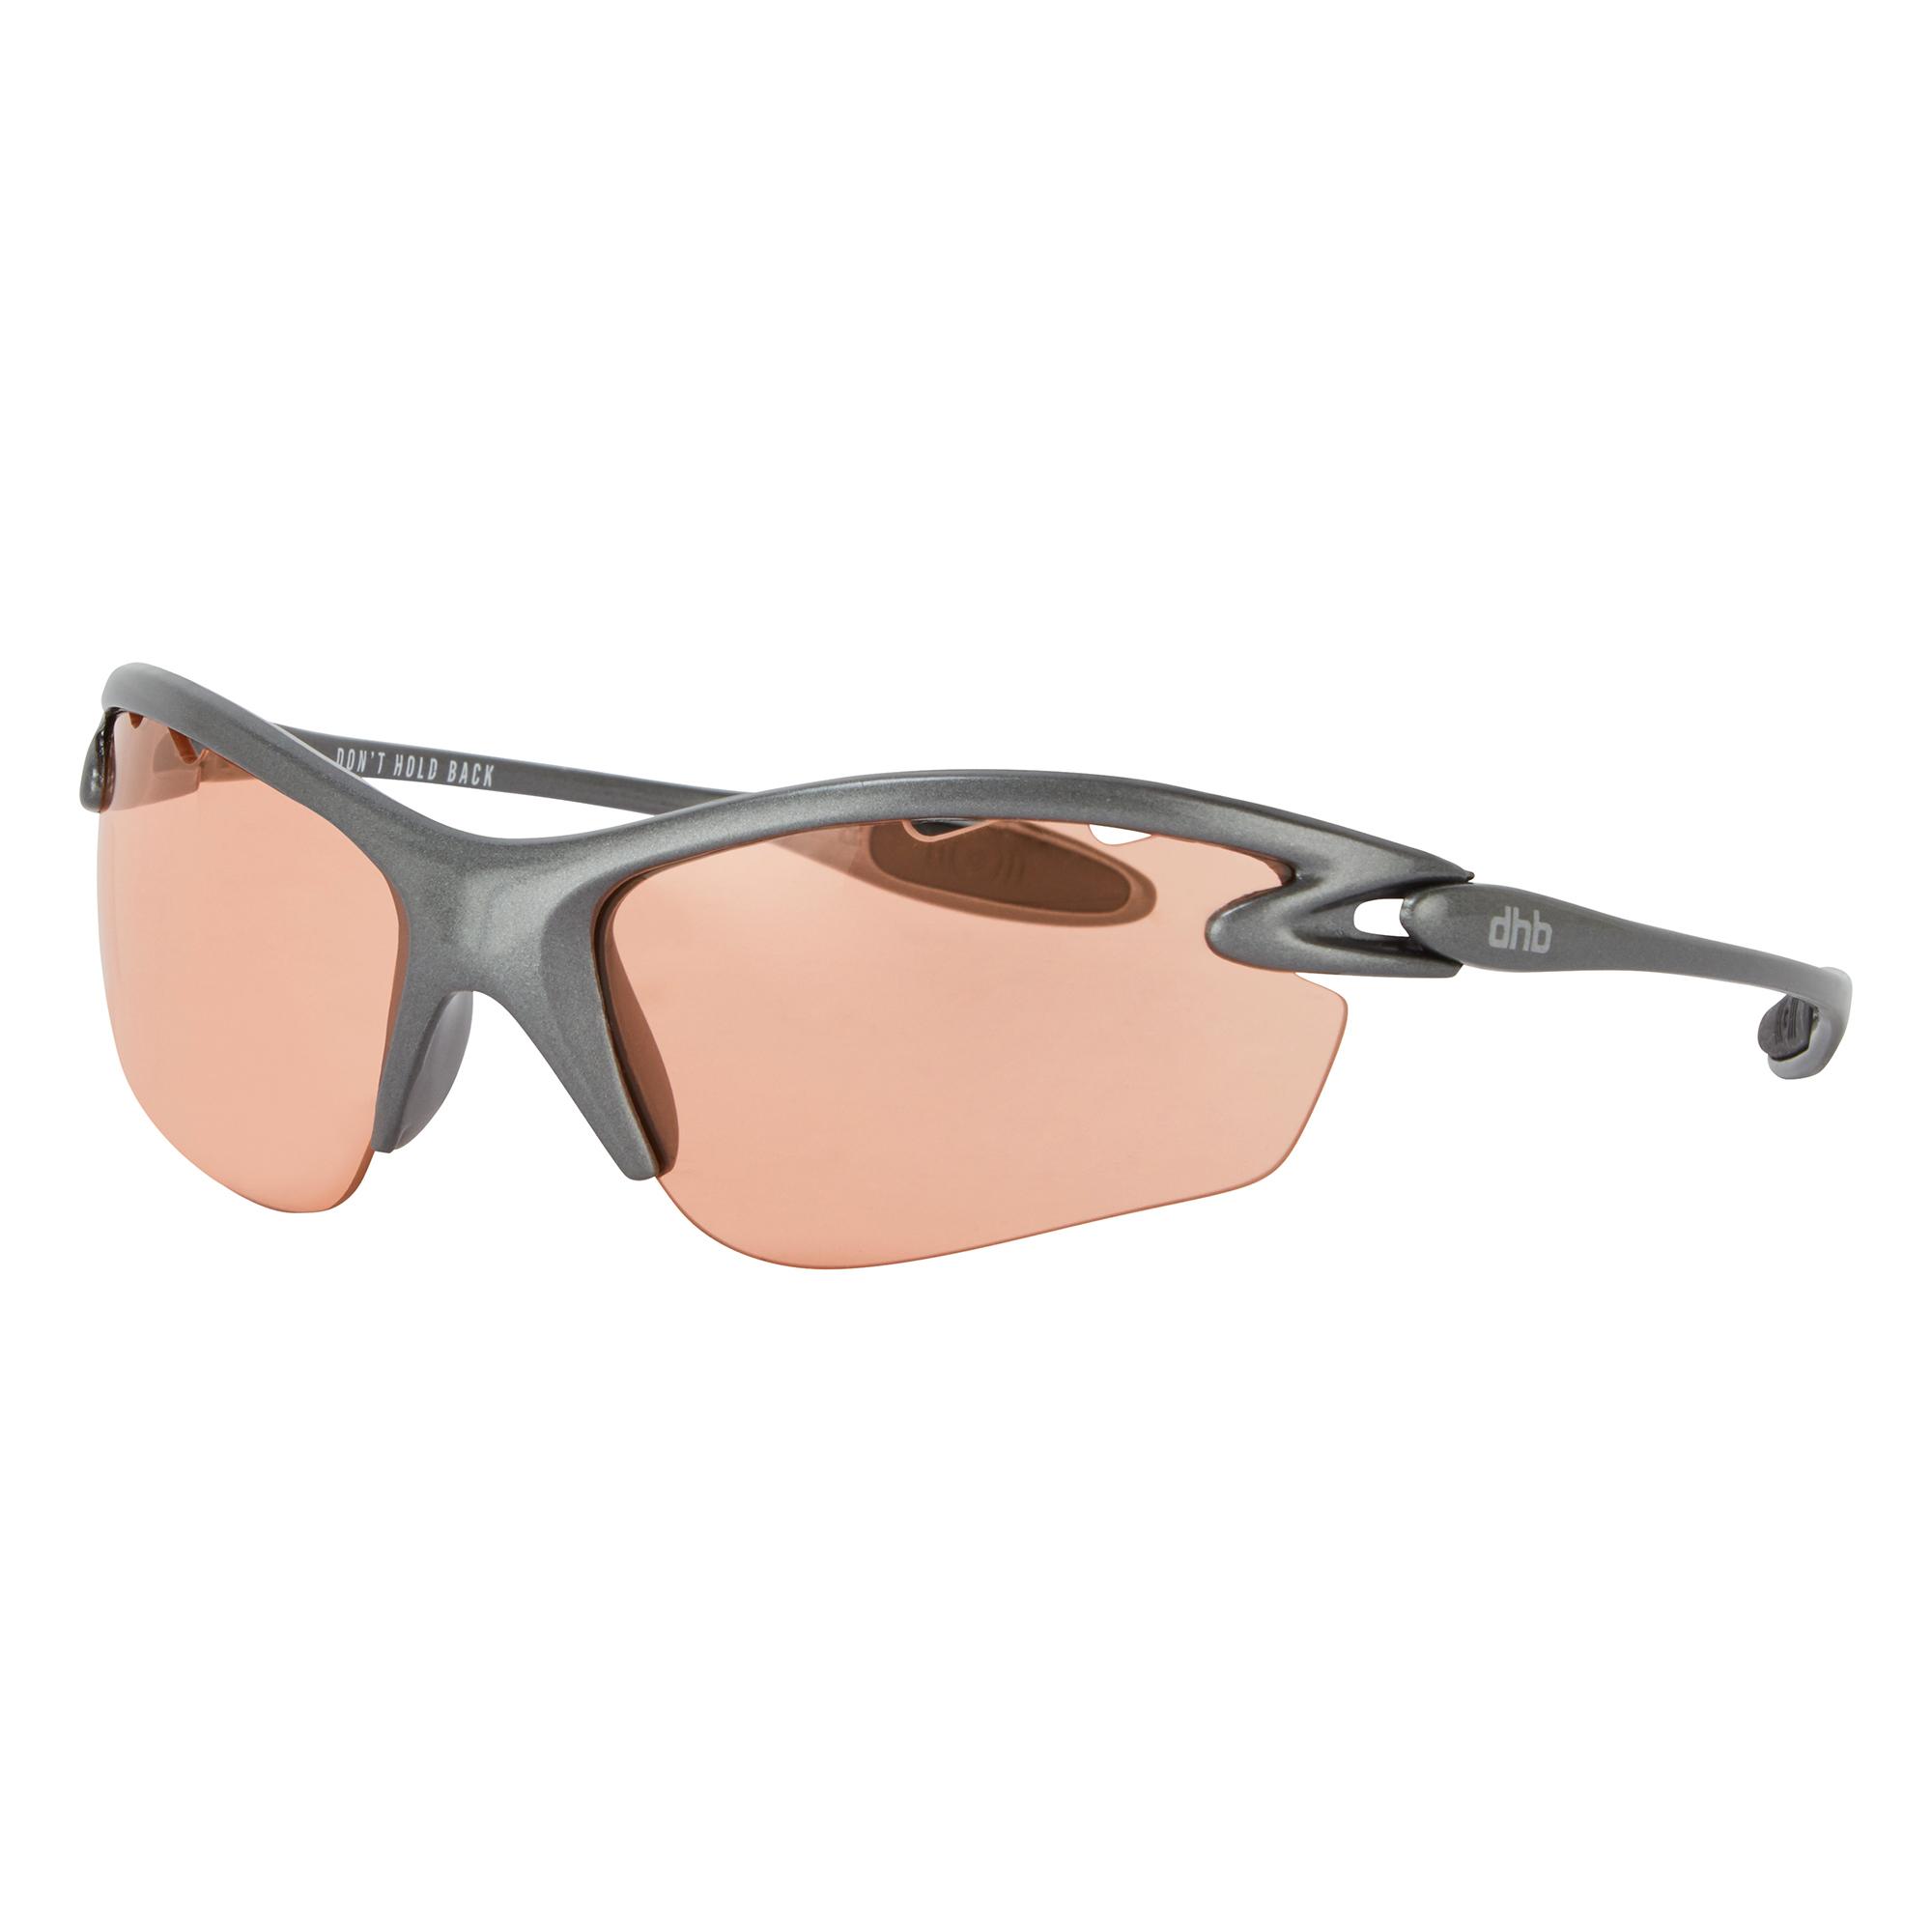 Dhb Ultralite Sunglasses - Gunmetal/orange